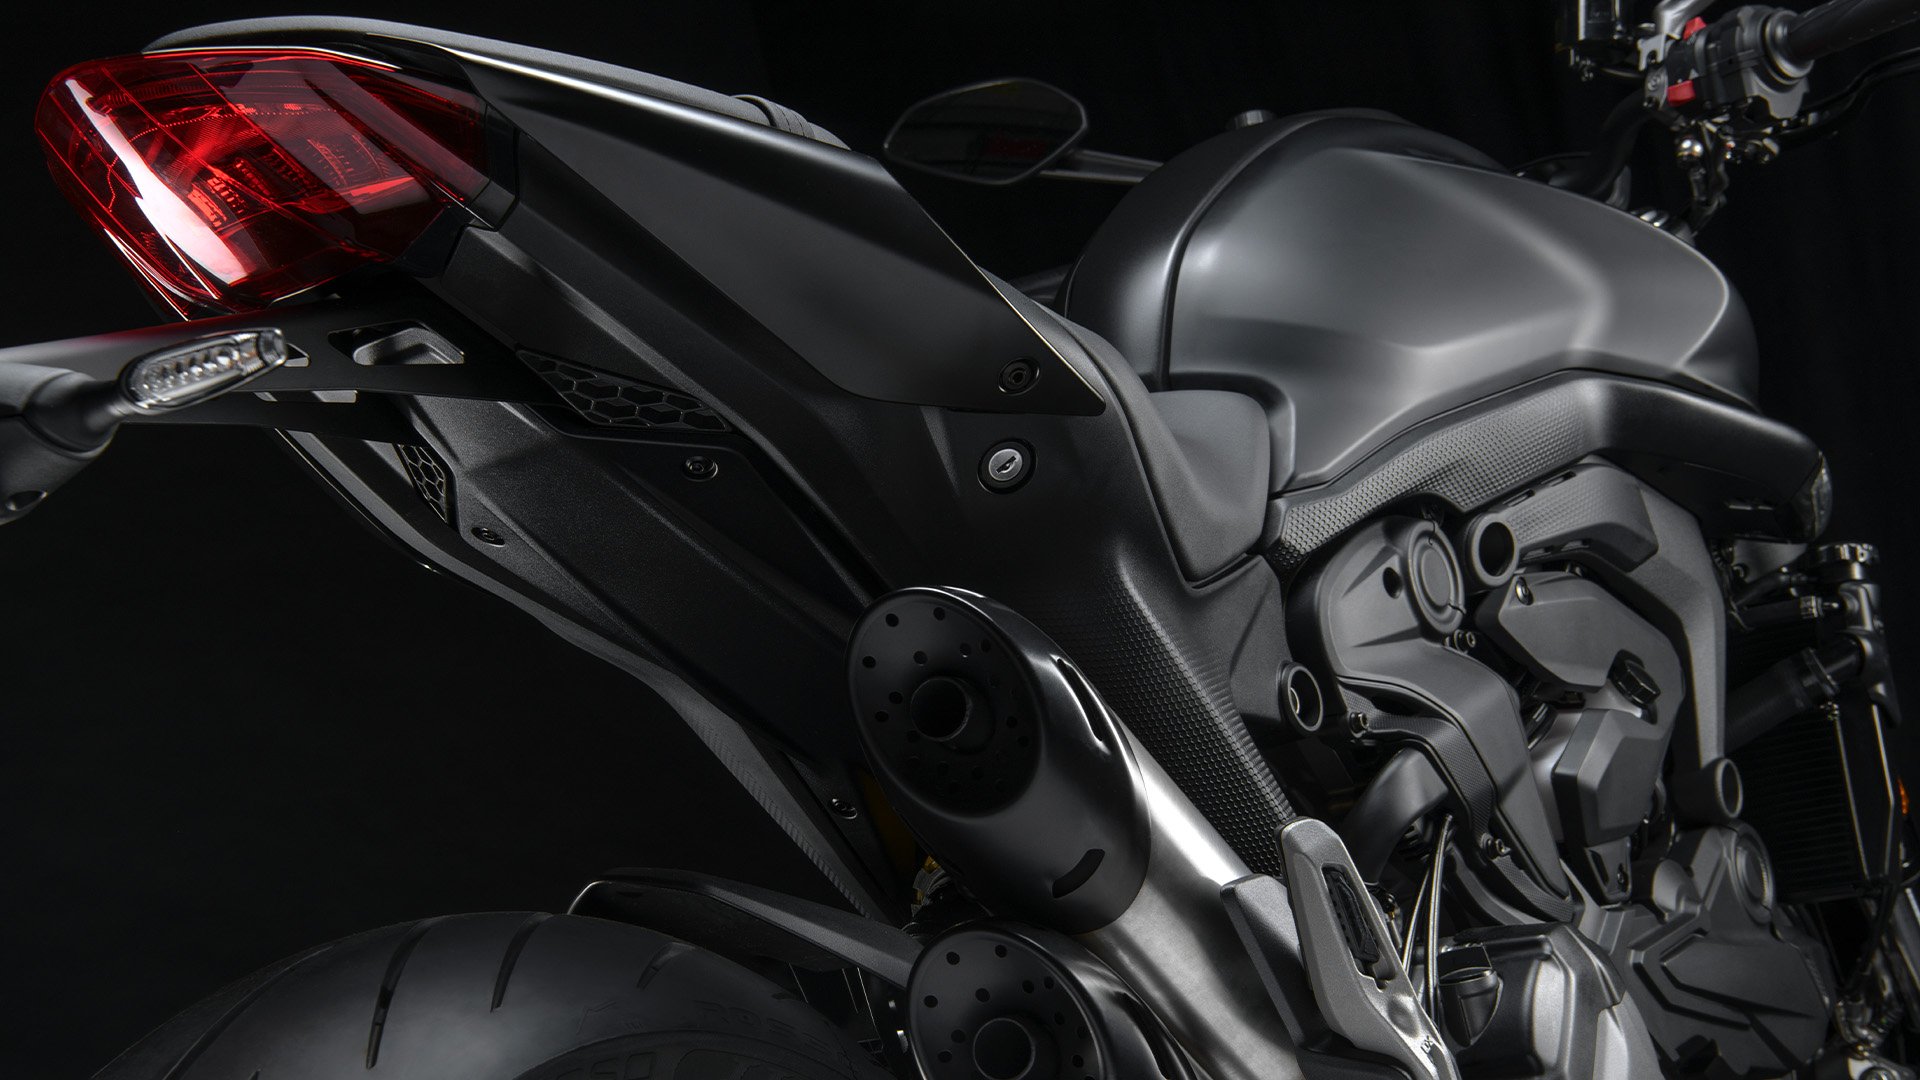 Ducati_Monster_design_gallery_01_1920x1080.jpg